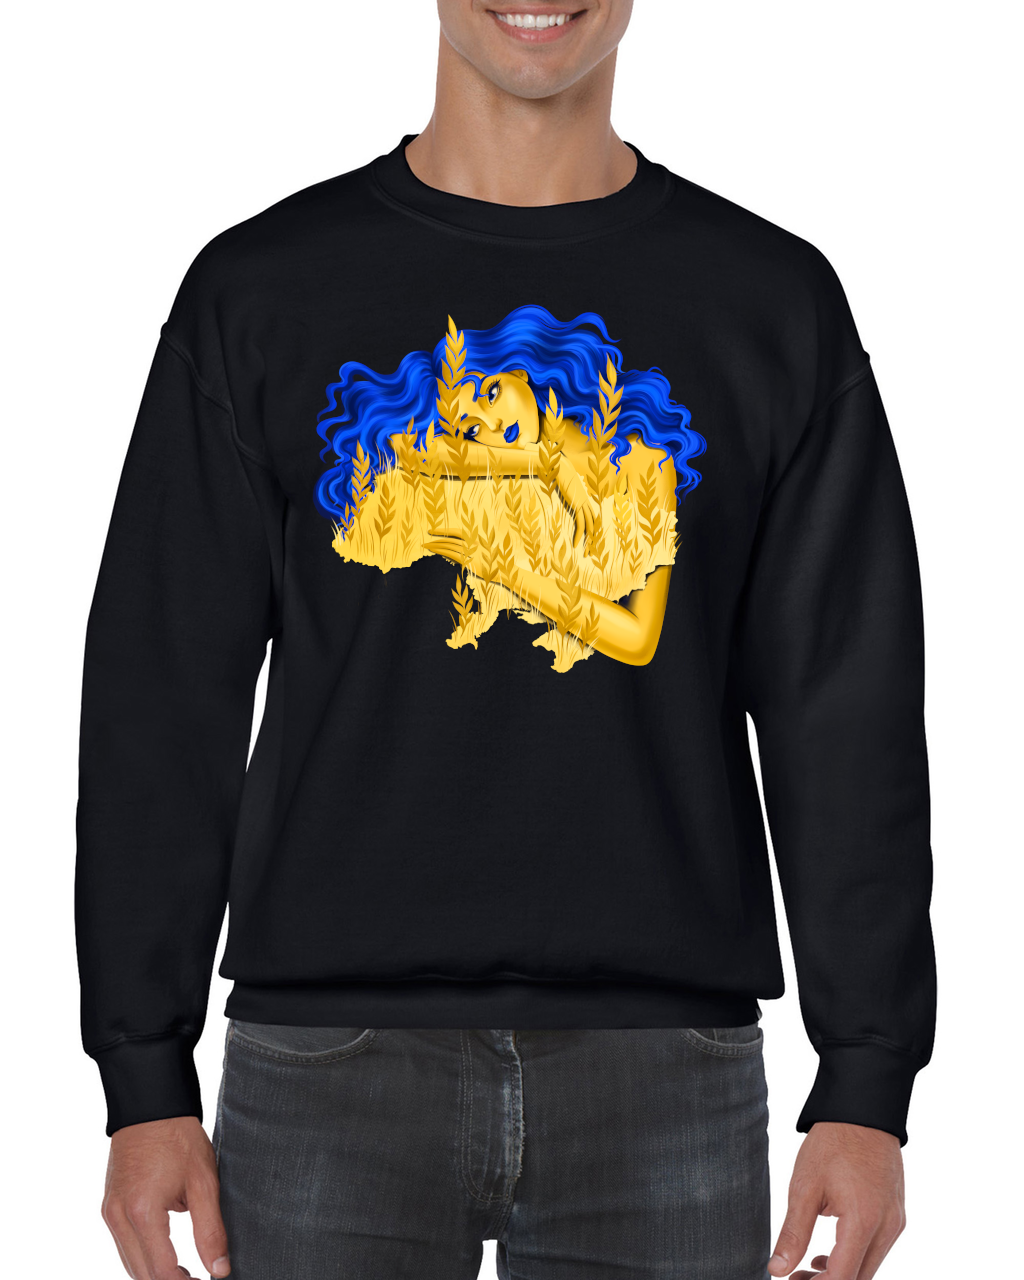 Adult unisex sweatshirt "Berehynia"